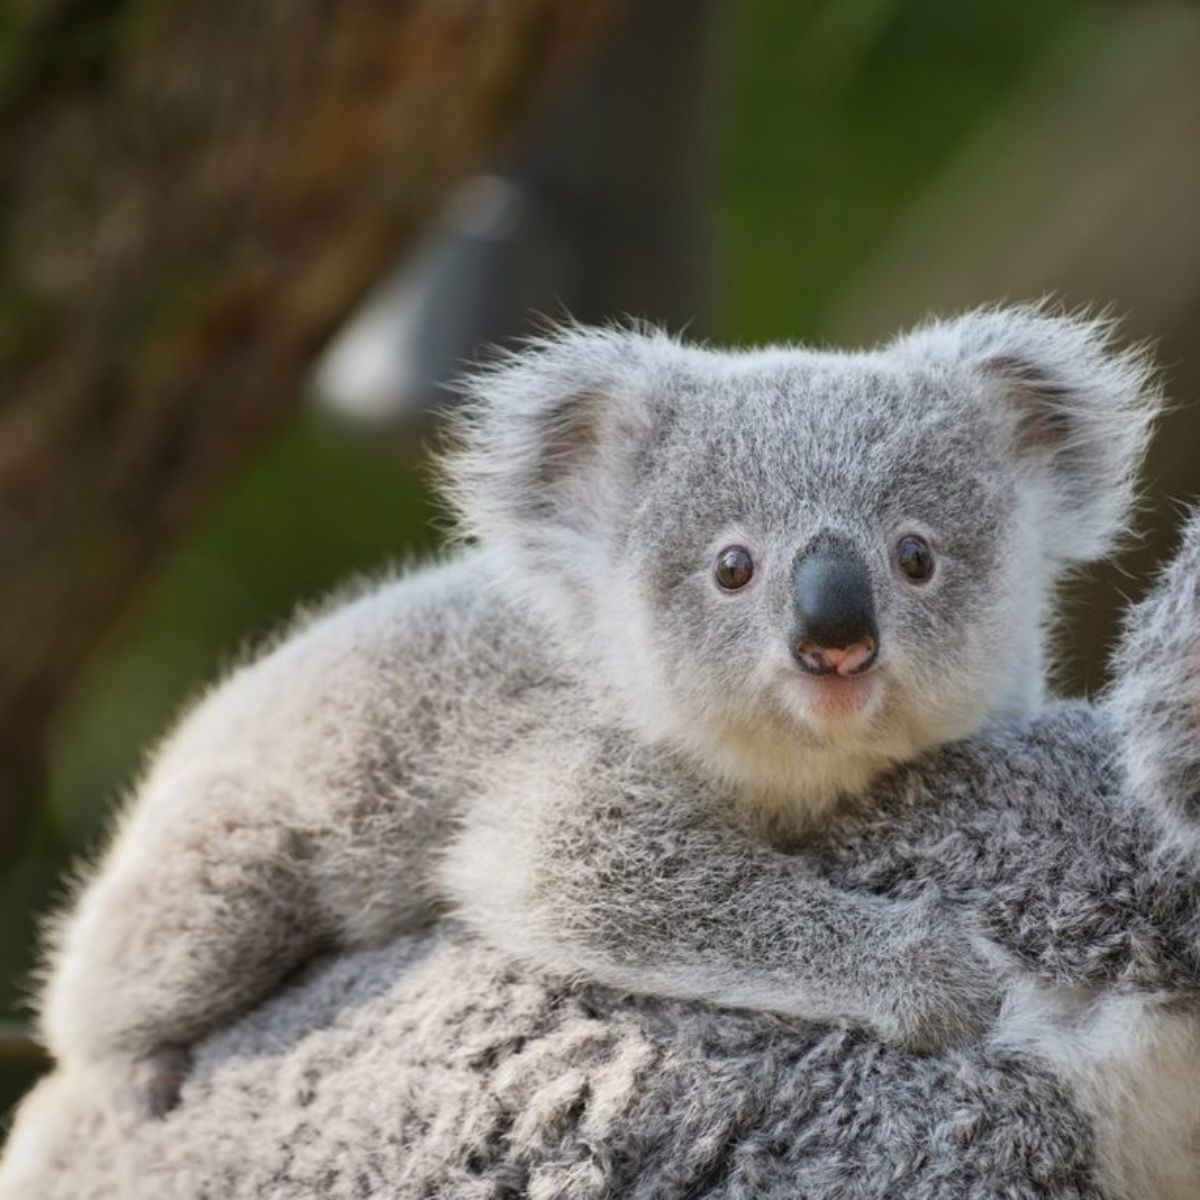 grey baby koala holding onto its mother